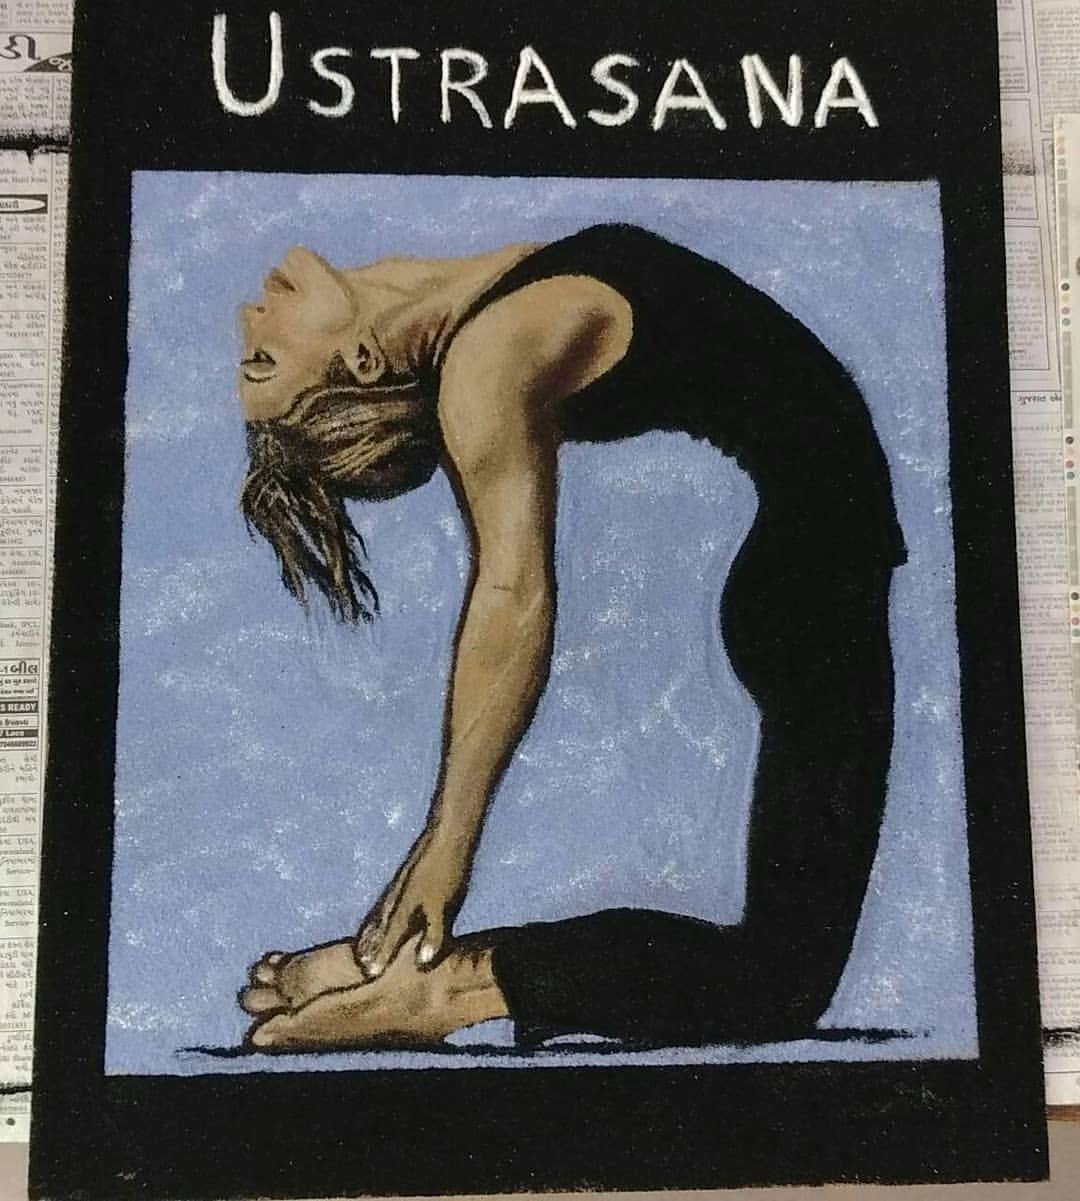 rangoli-design-ustrasana-international-yoga-day